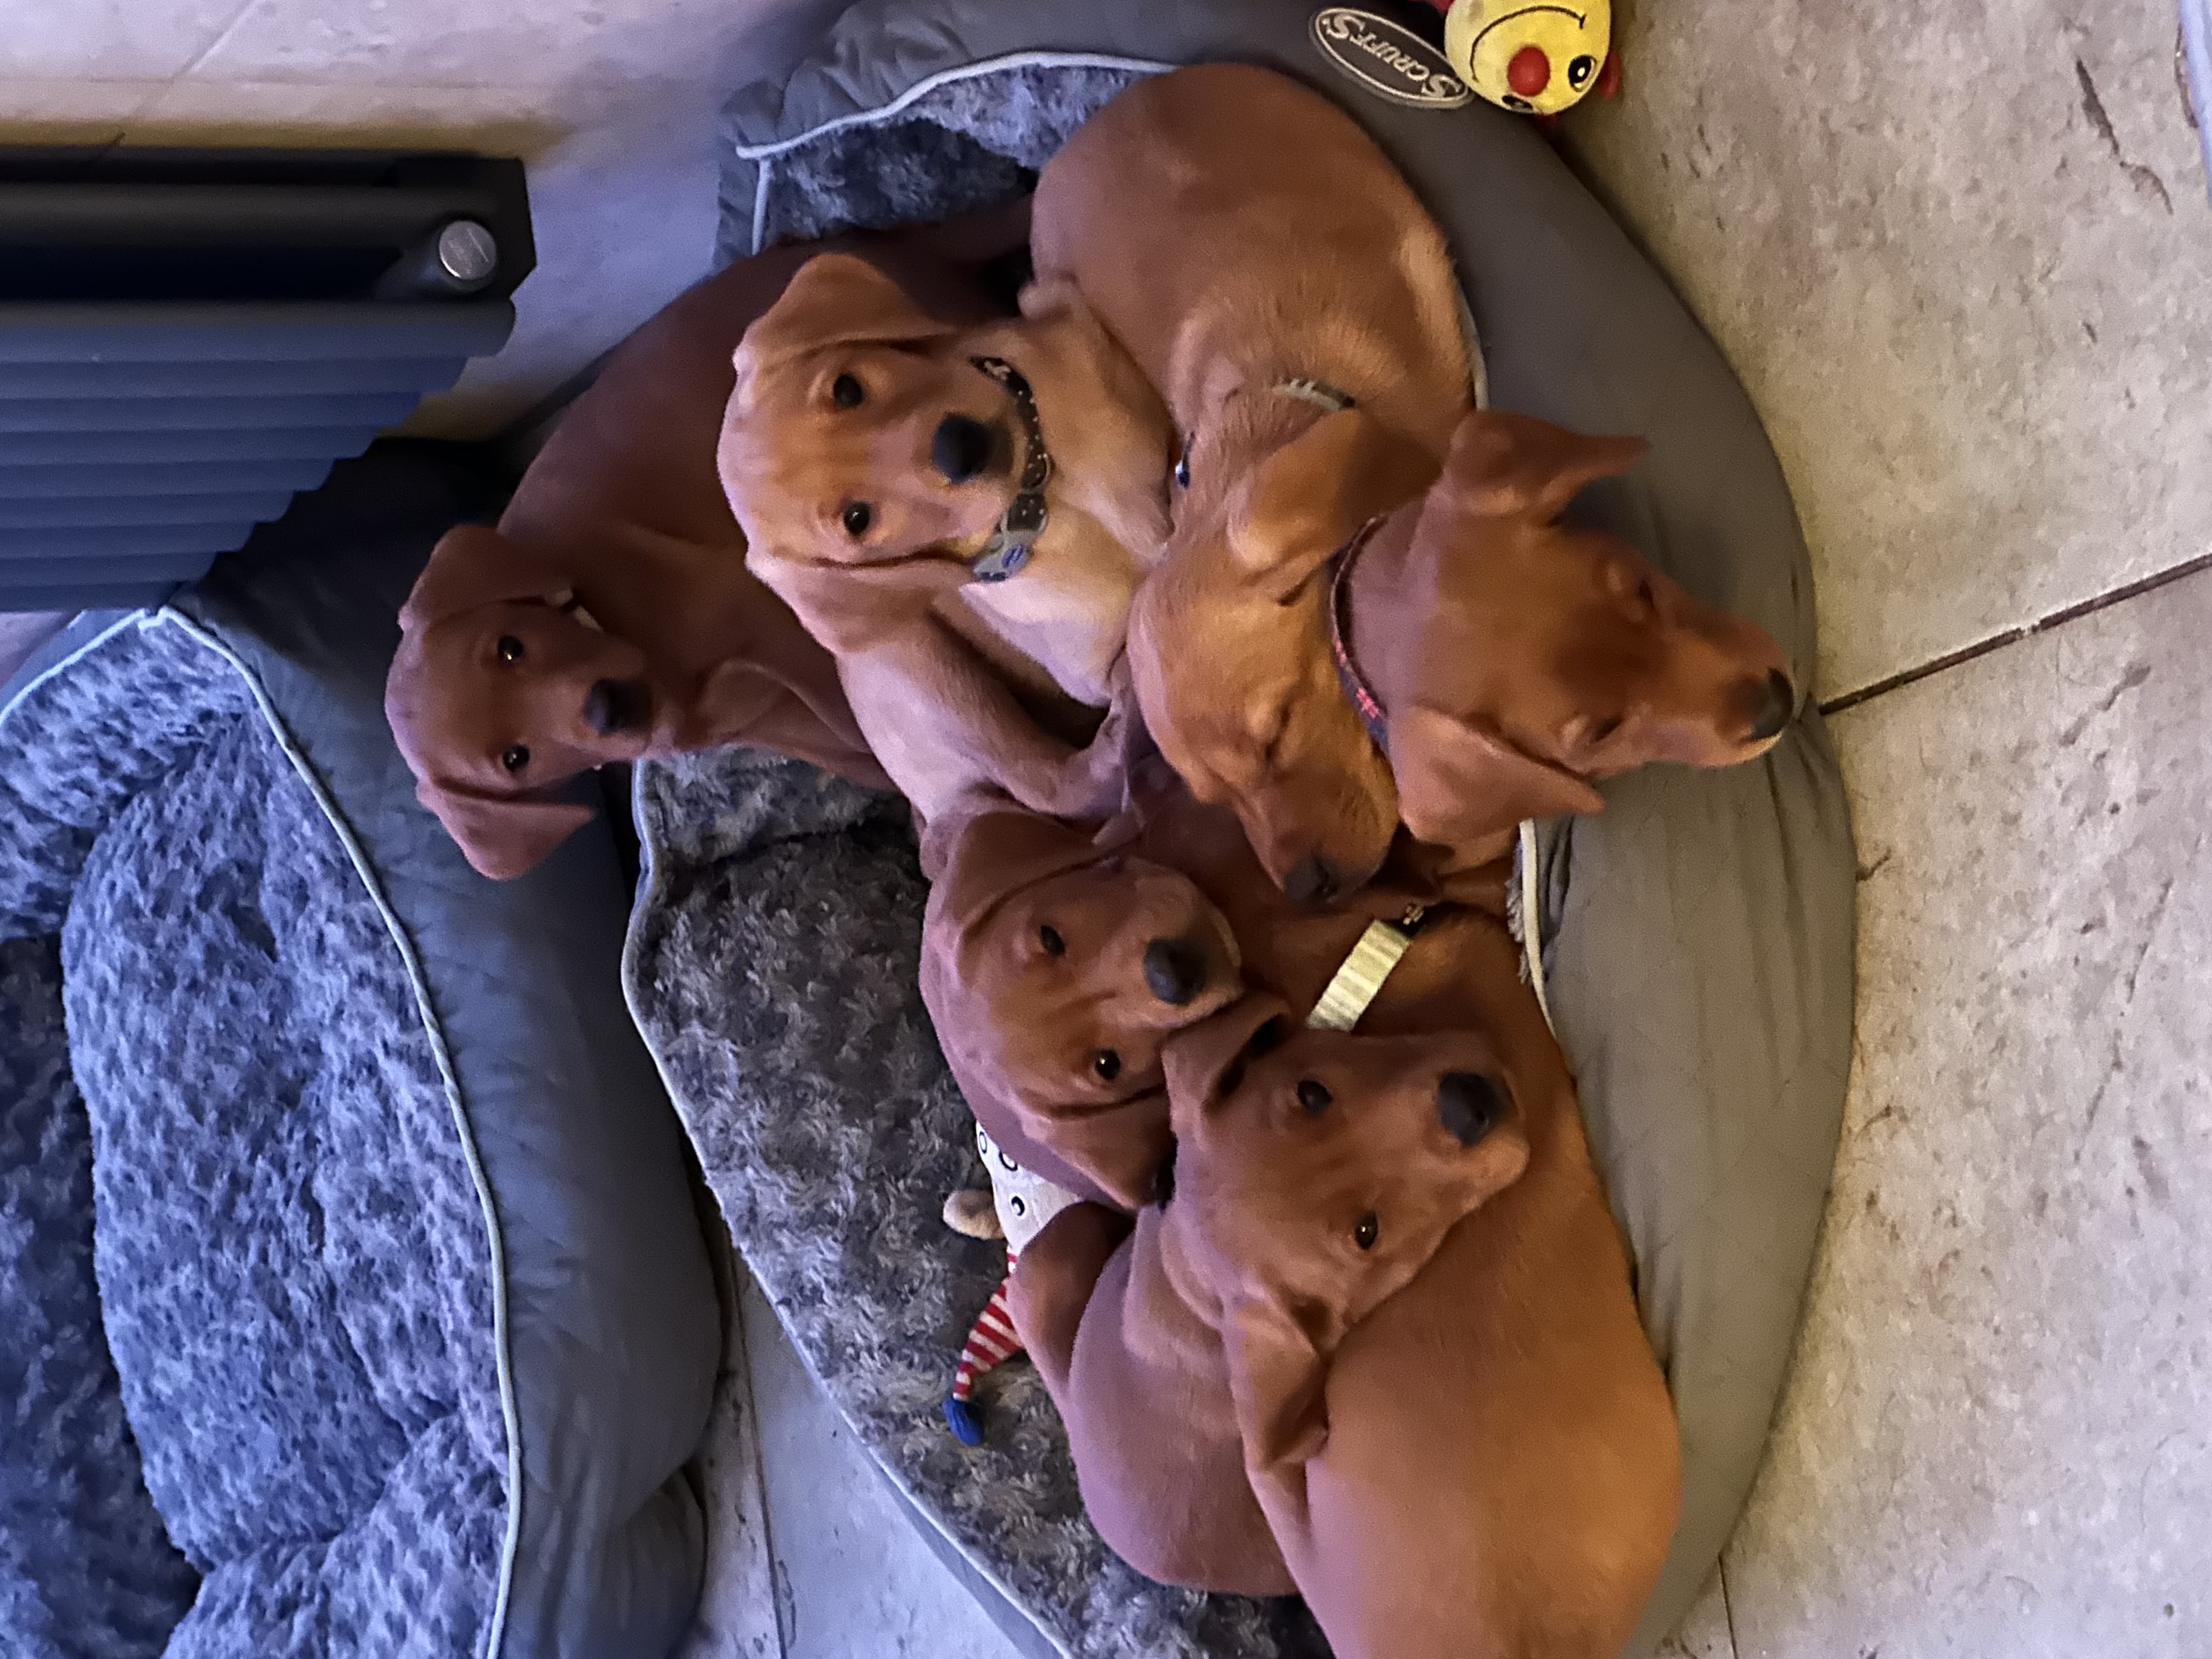 Her daughters puppies